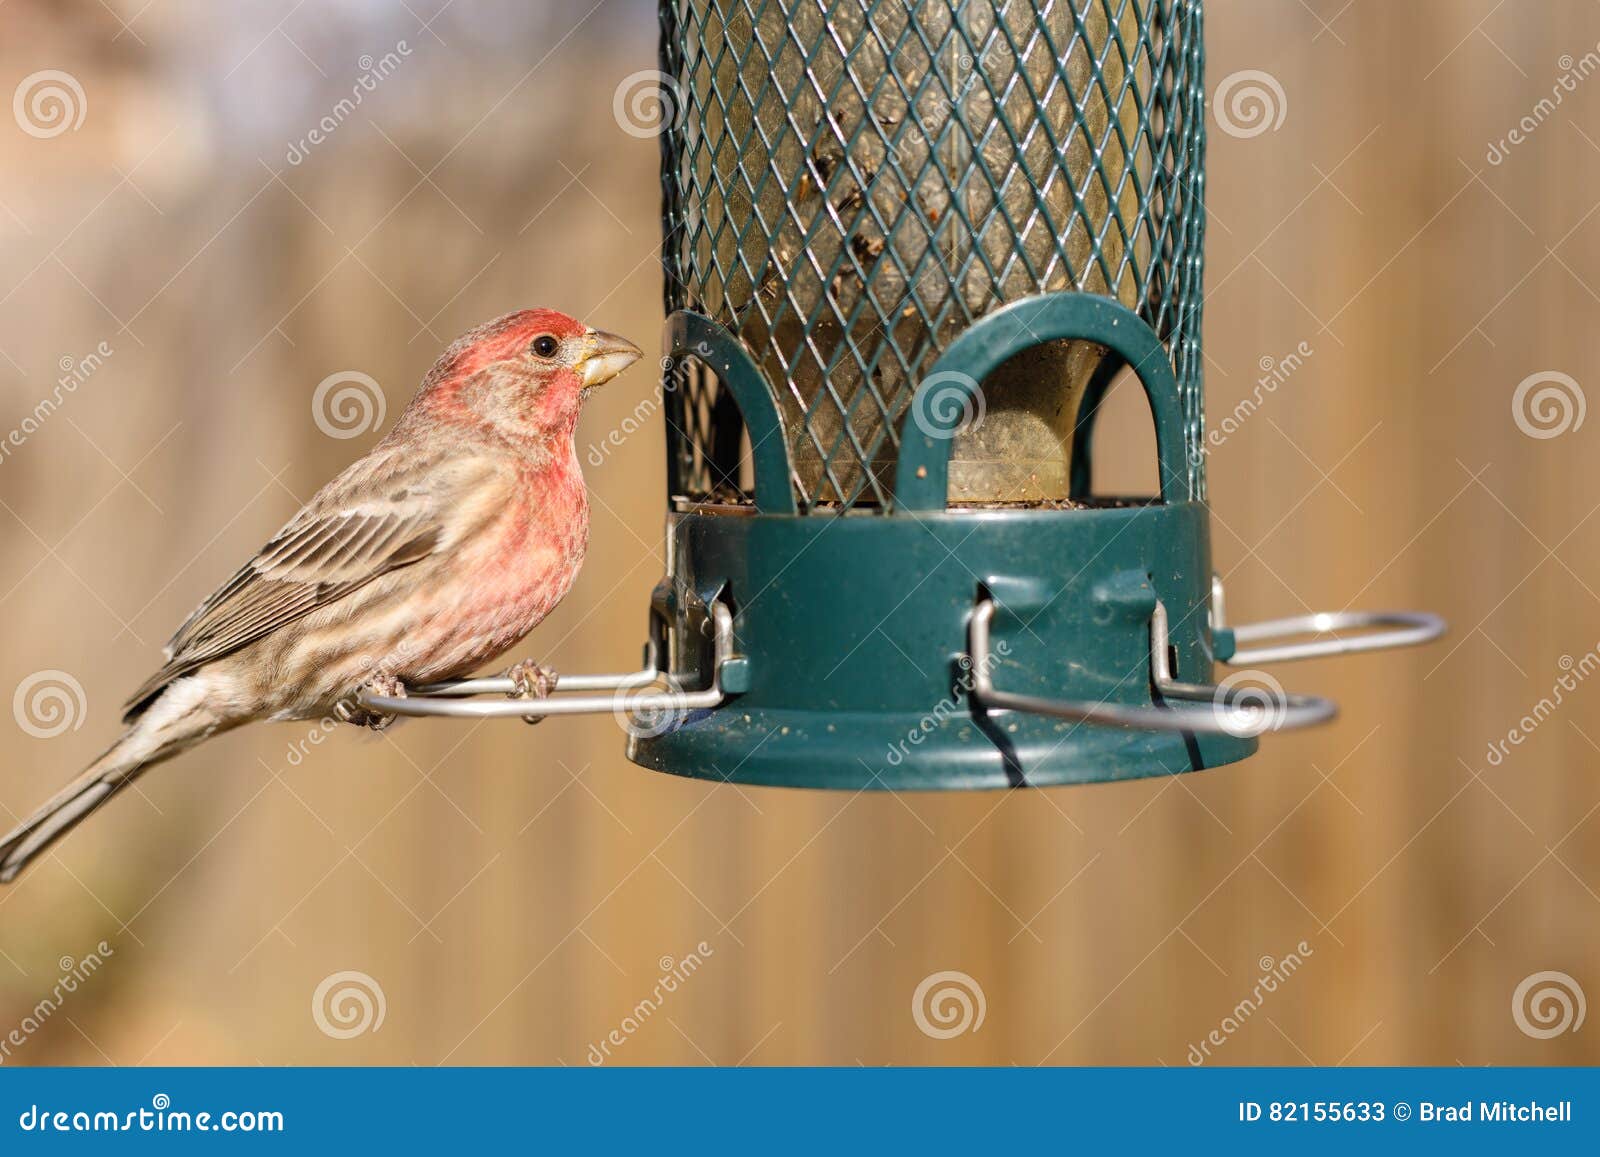 Bird Feeding At Backyard Feeder Stock Image Image Of Remote